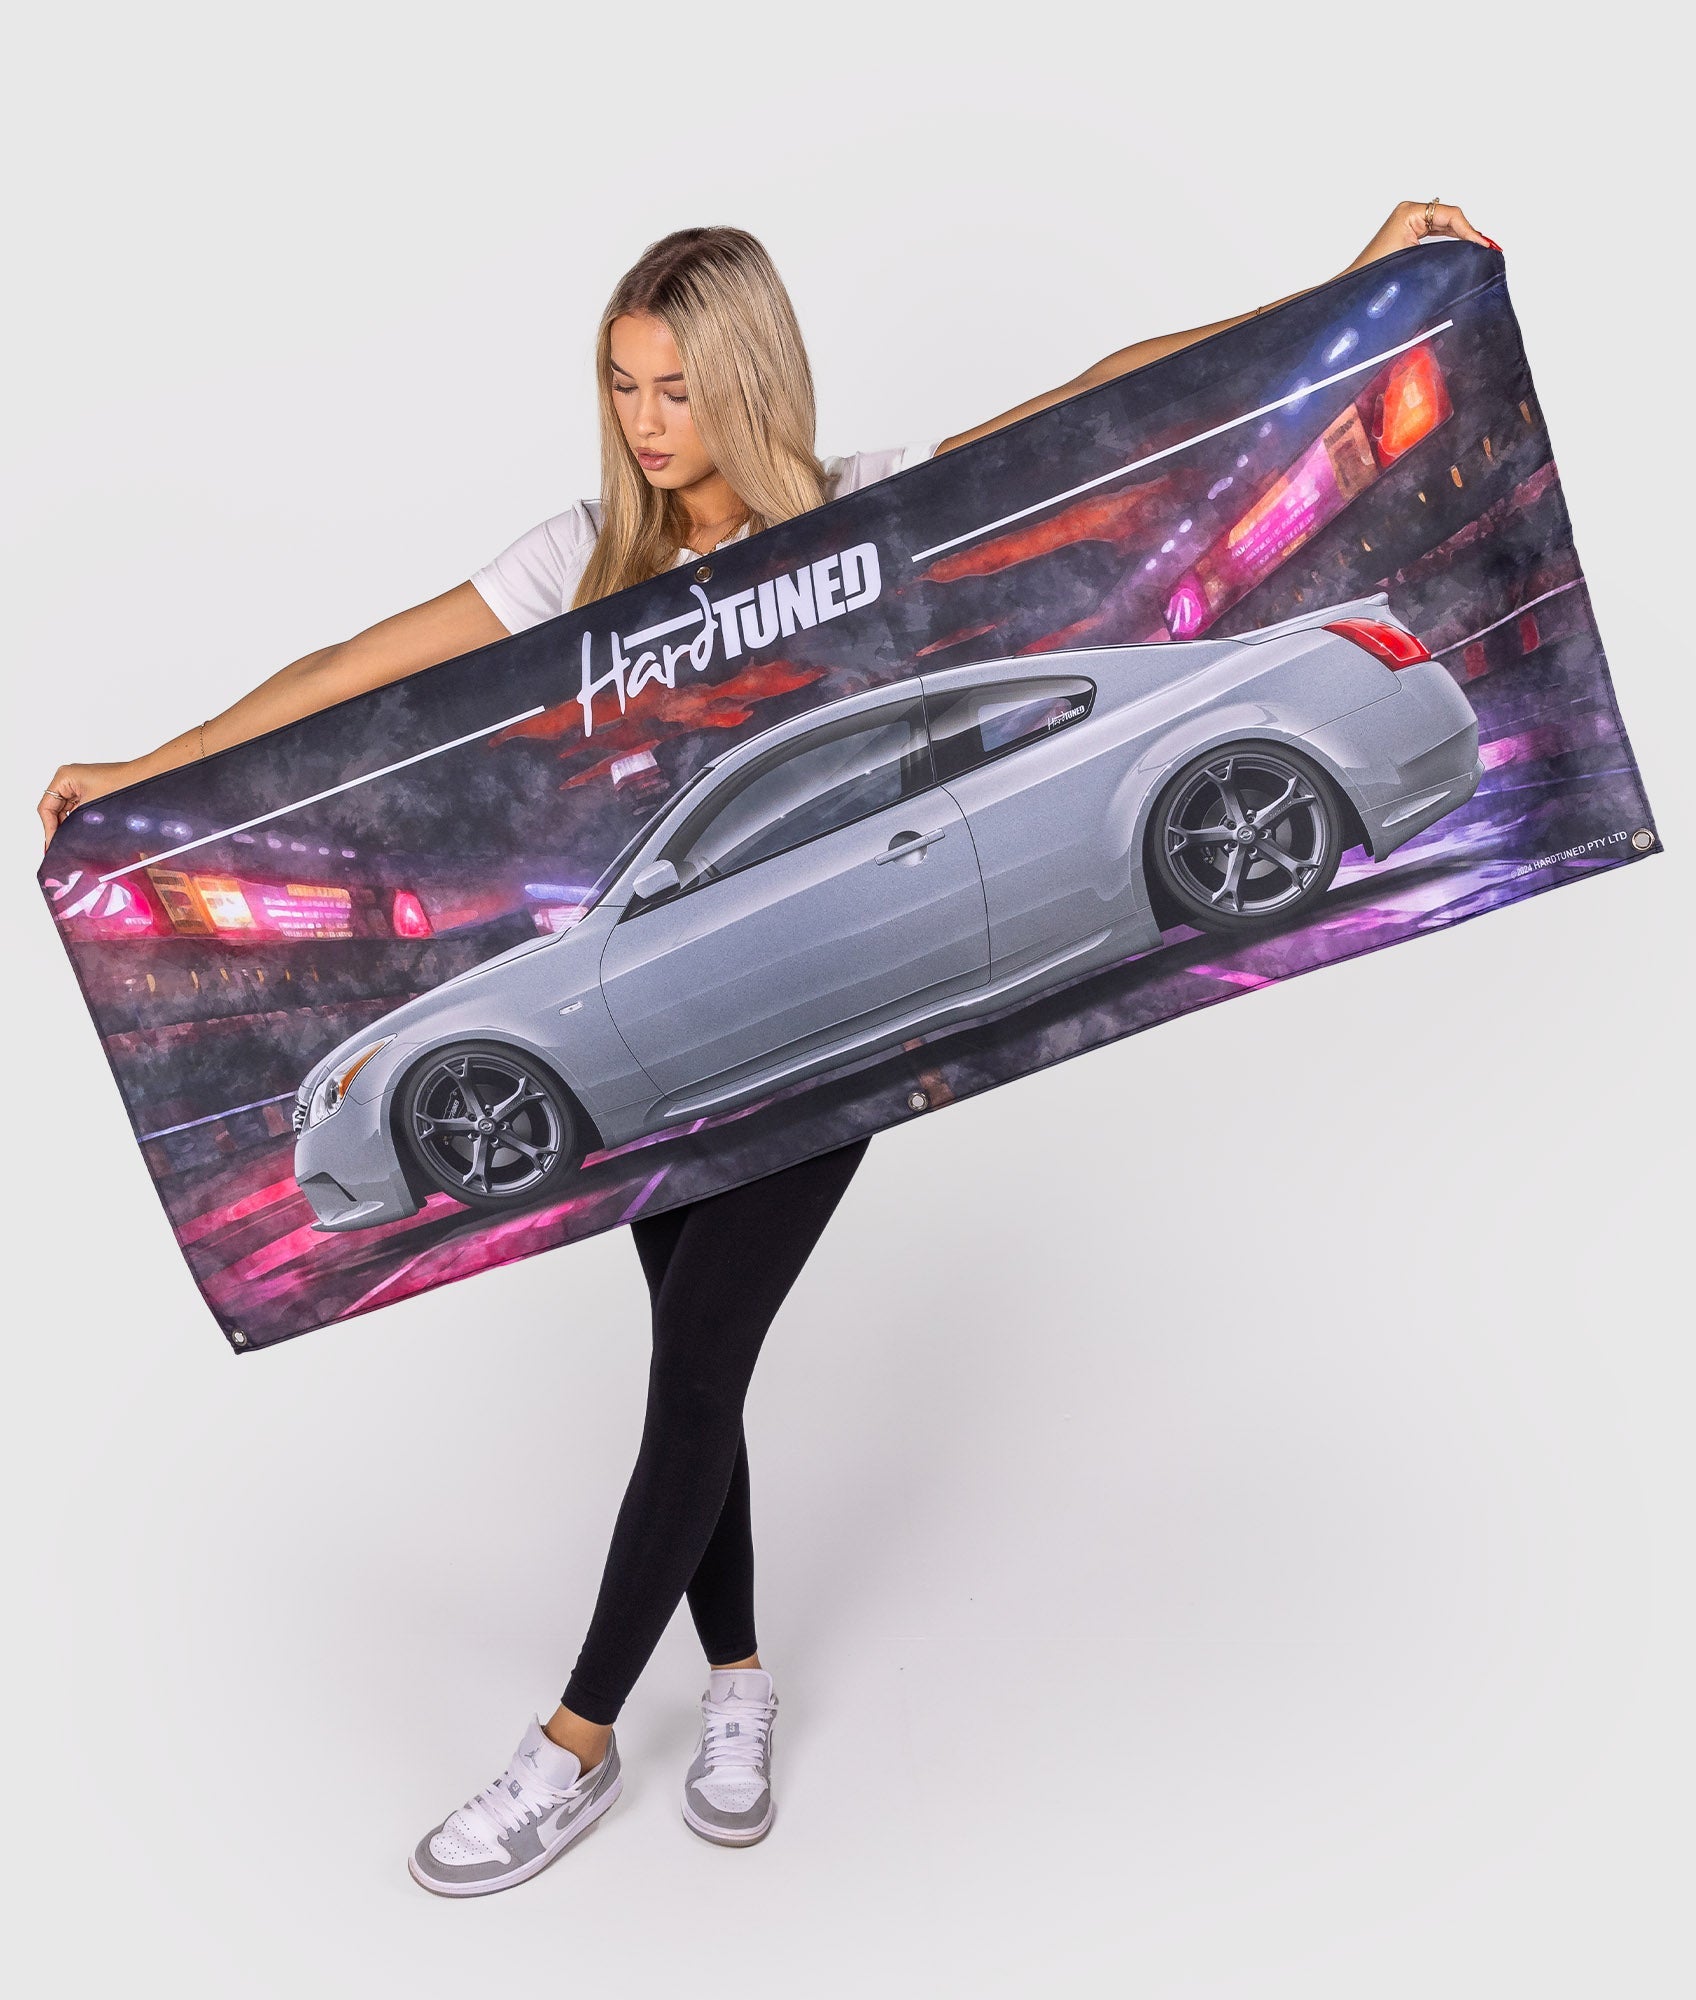 Nissan V36 Skyline / Infinity G37 Garage Flag - Hardtuned